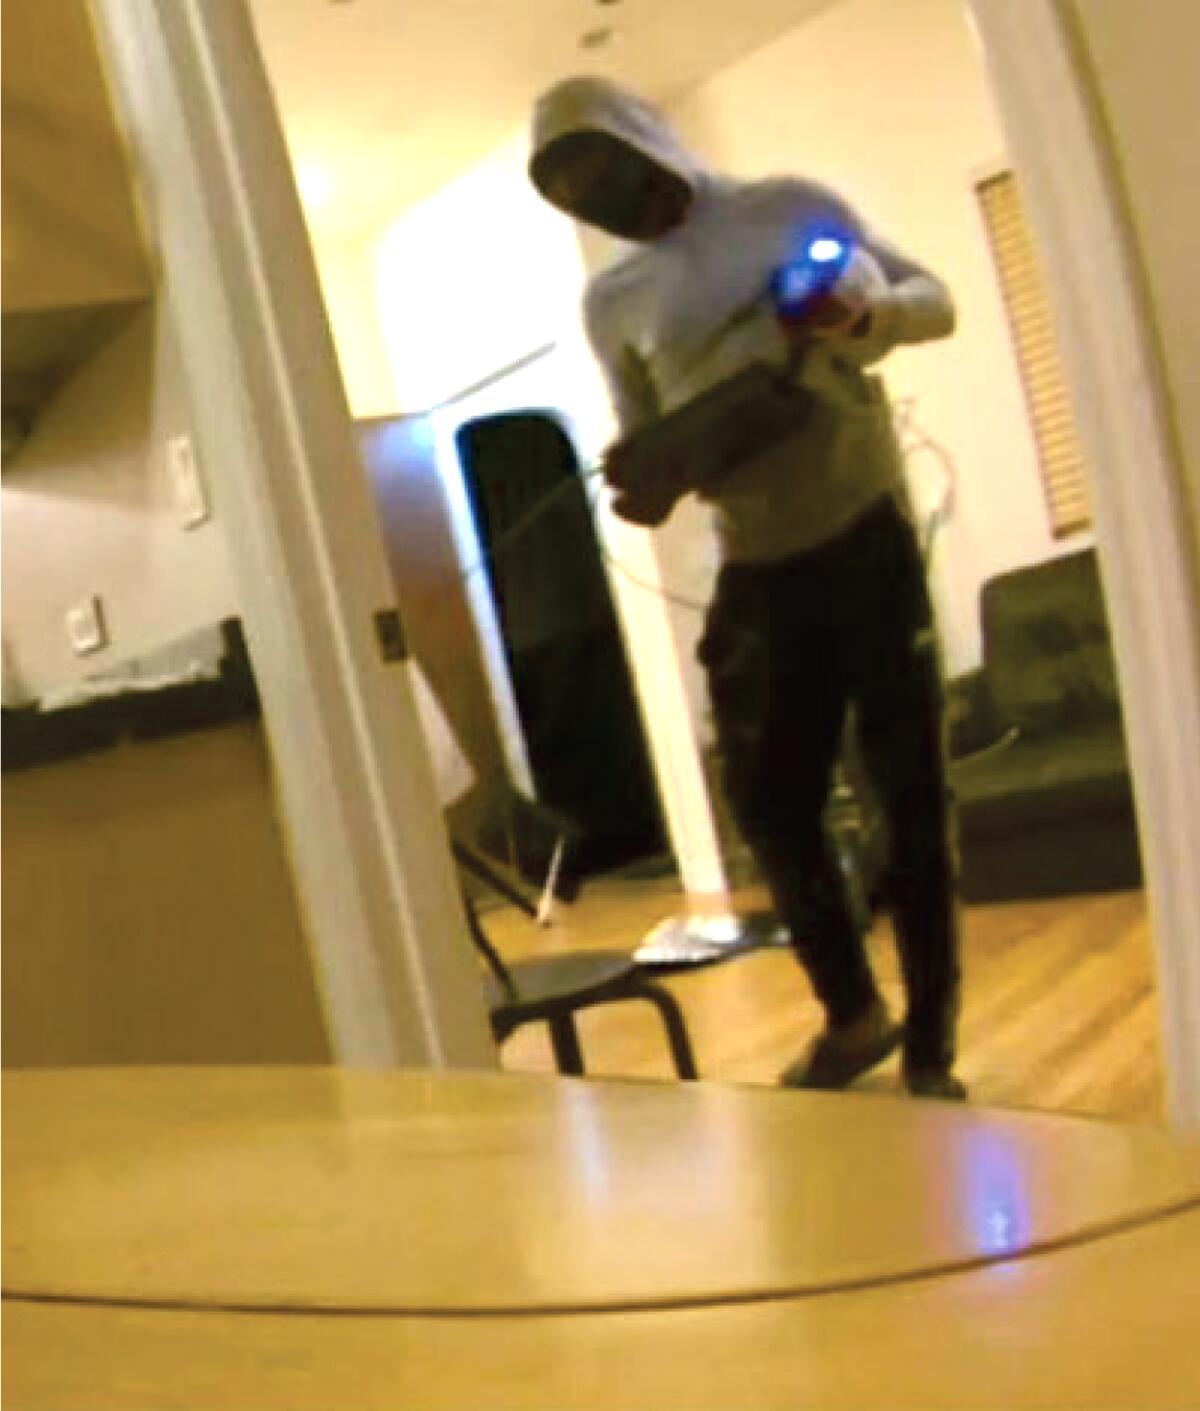 Amazon security camera video screenshot showing man activating stun gun.